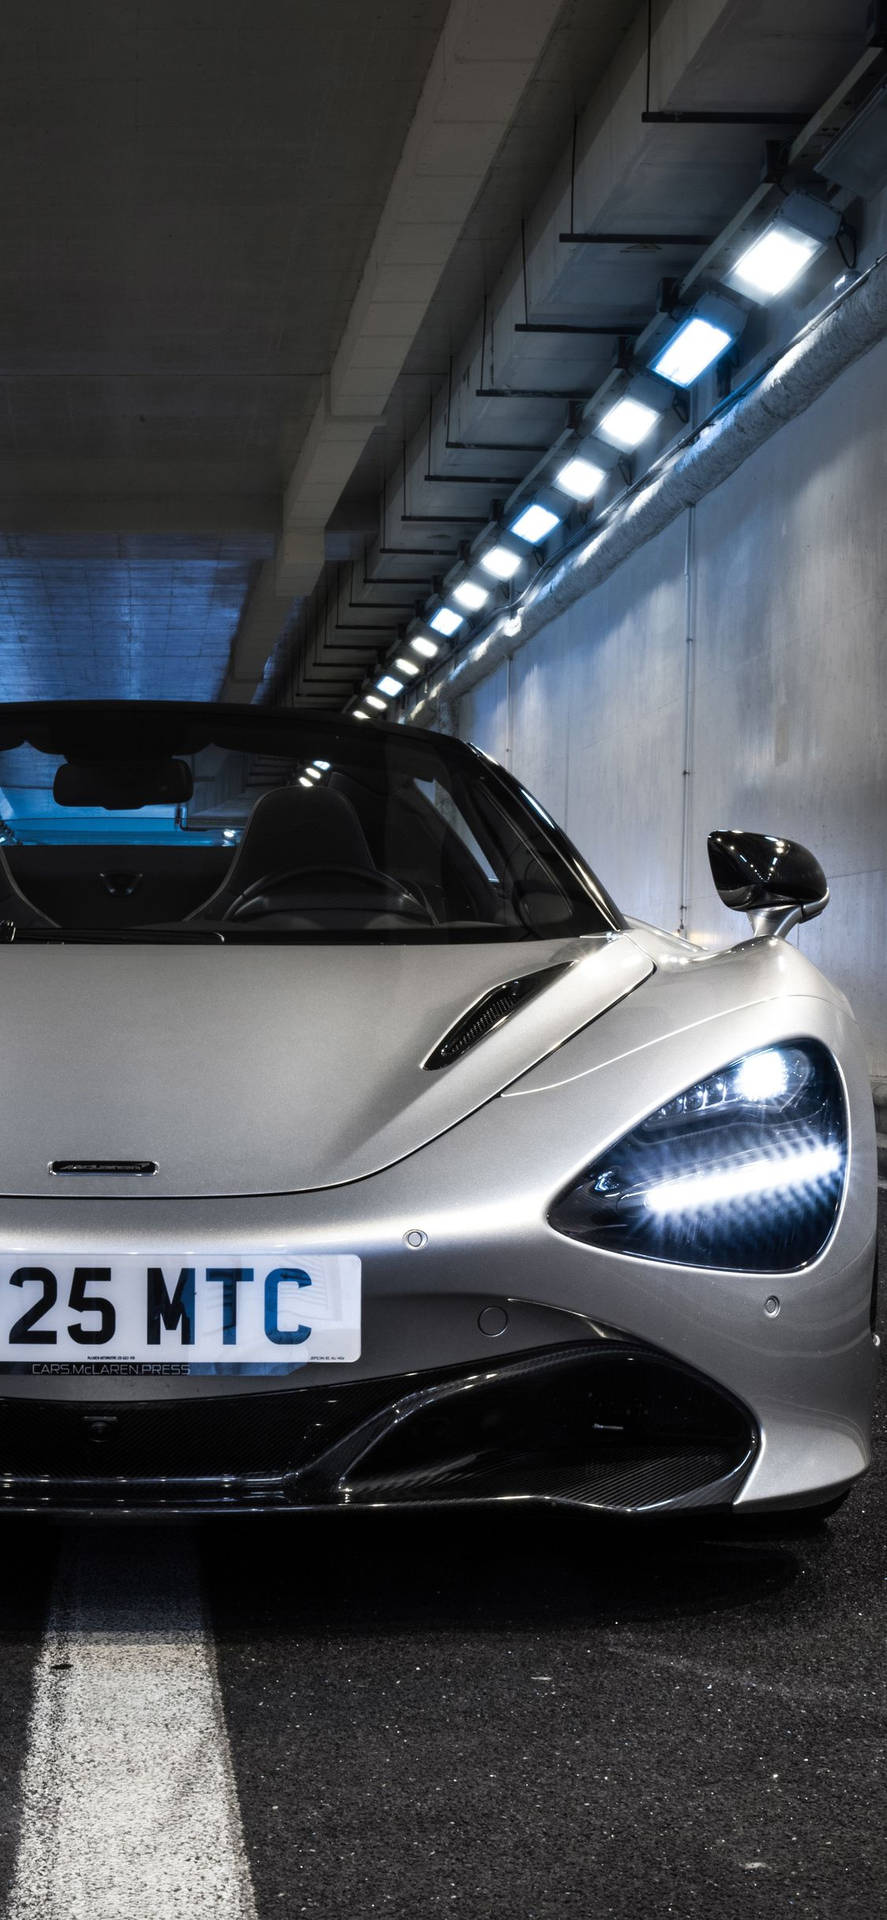 Mclaren 720s White Car In Tunnel Phone